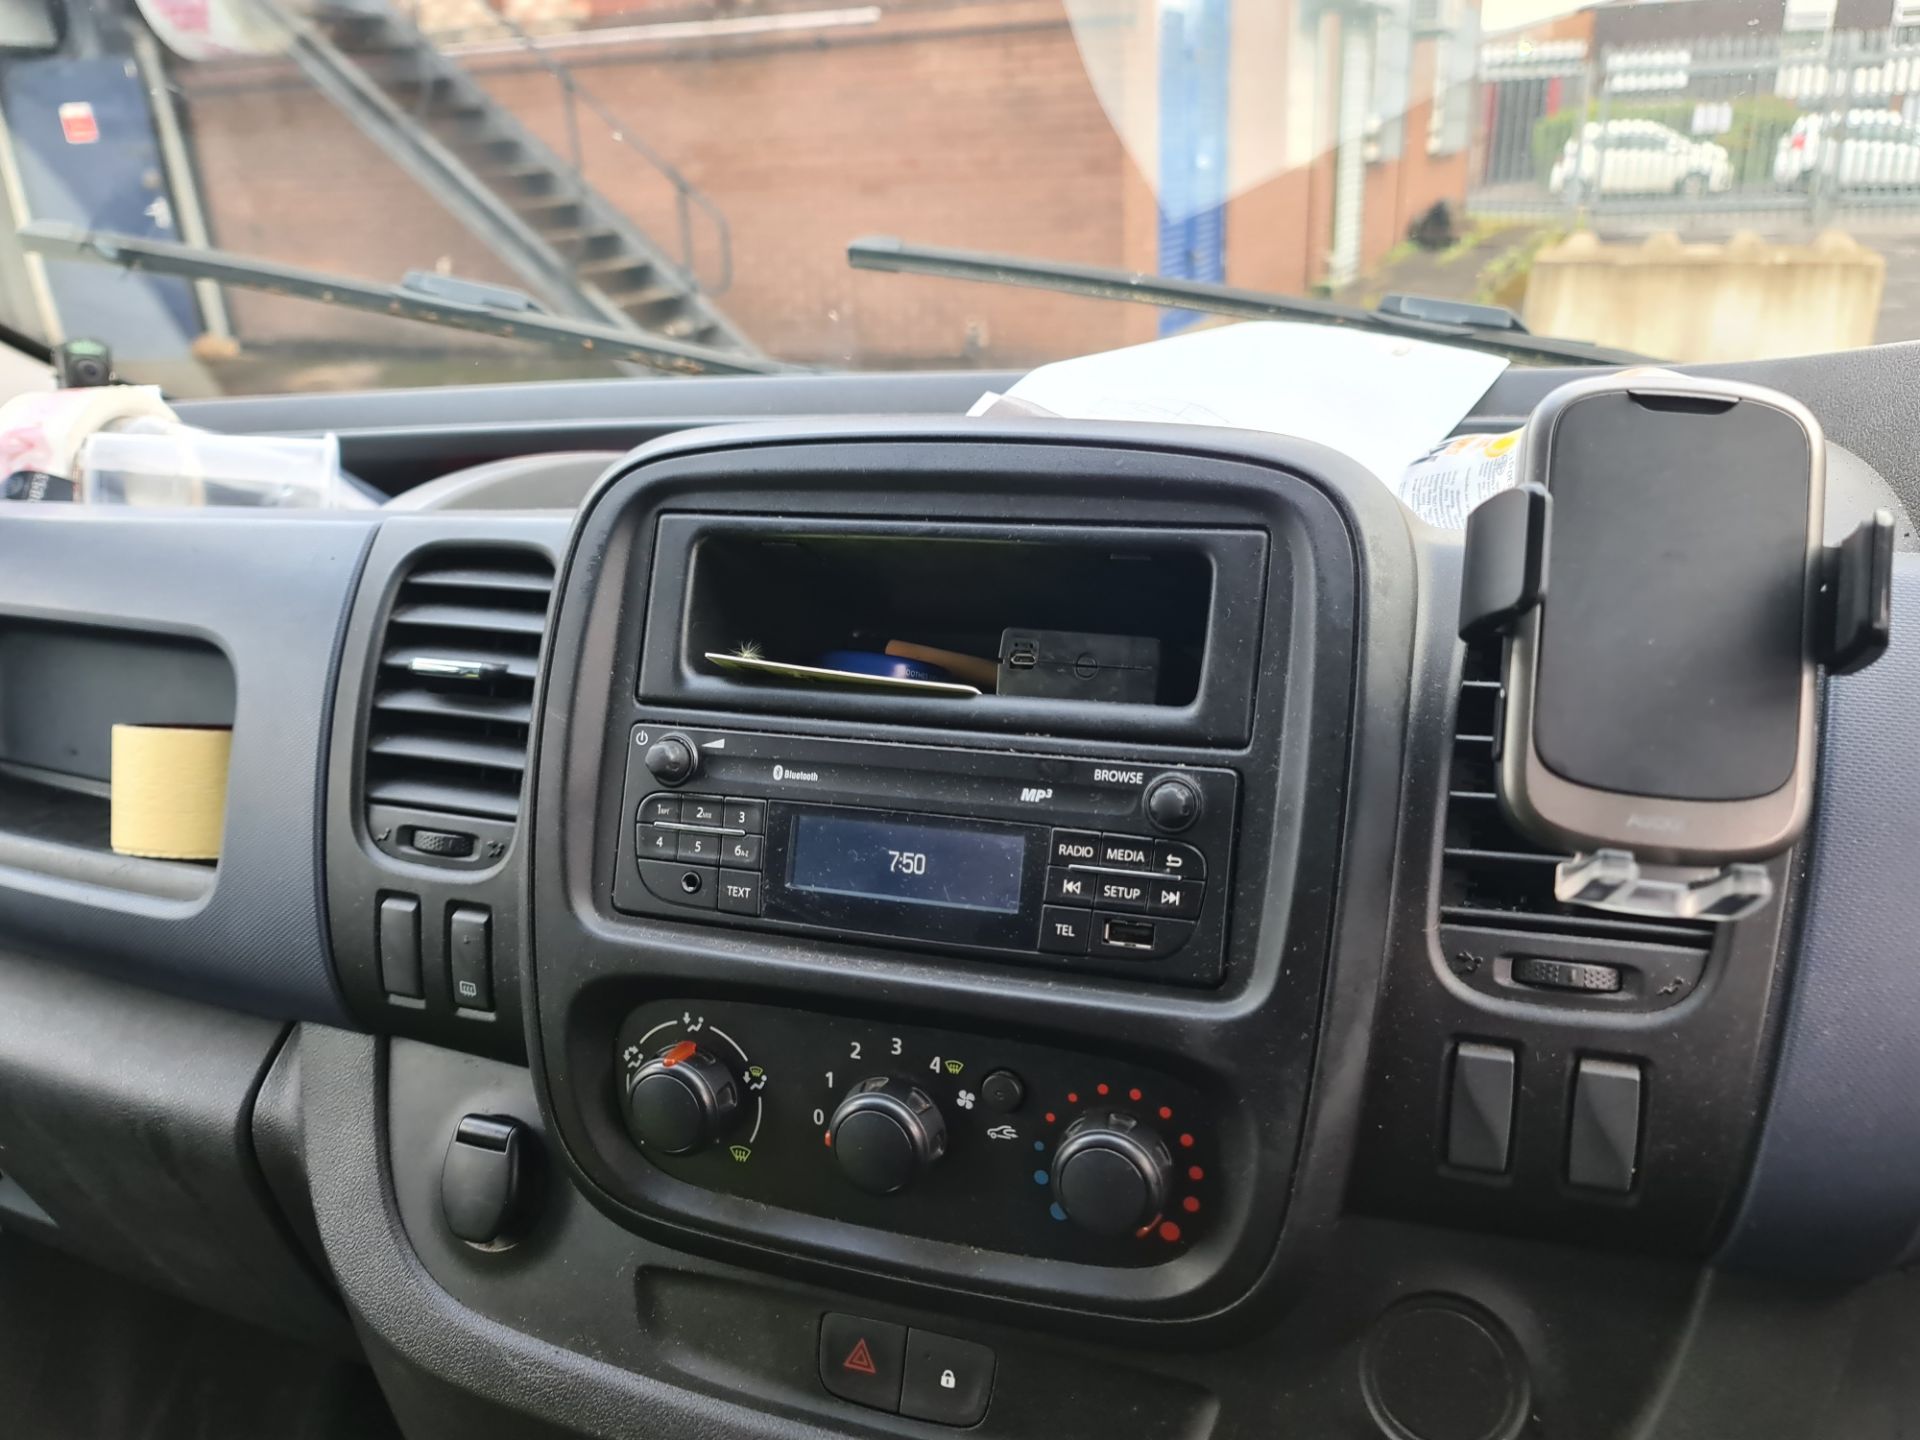 2015 Vauxhall Vivaro 2900 CDTi panel van - Image 72 of 81